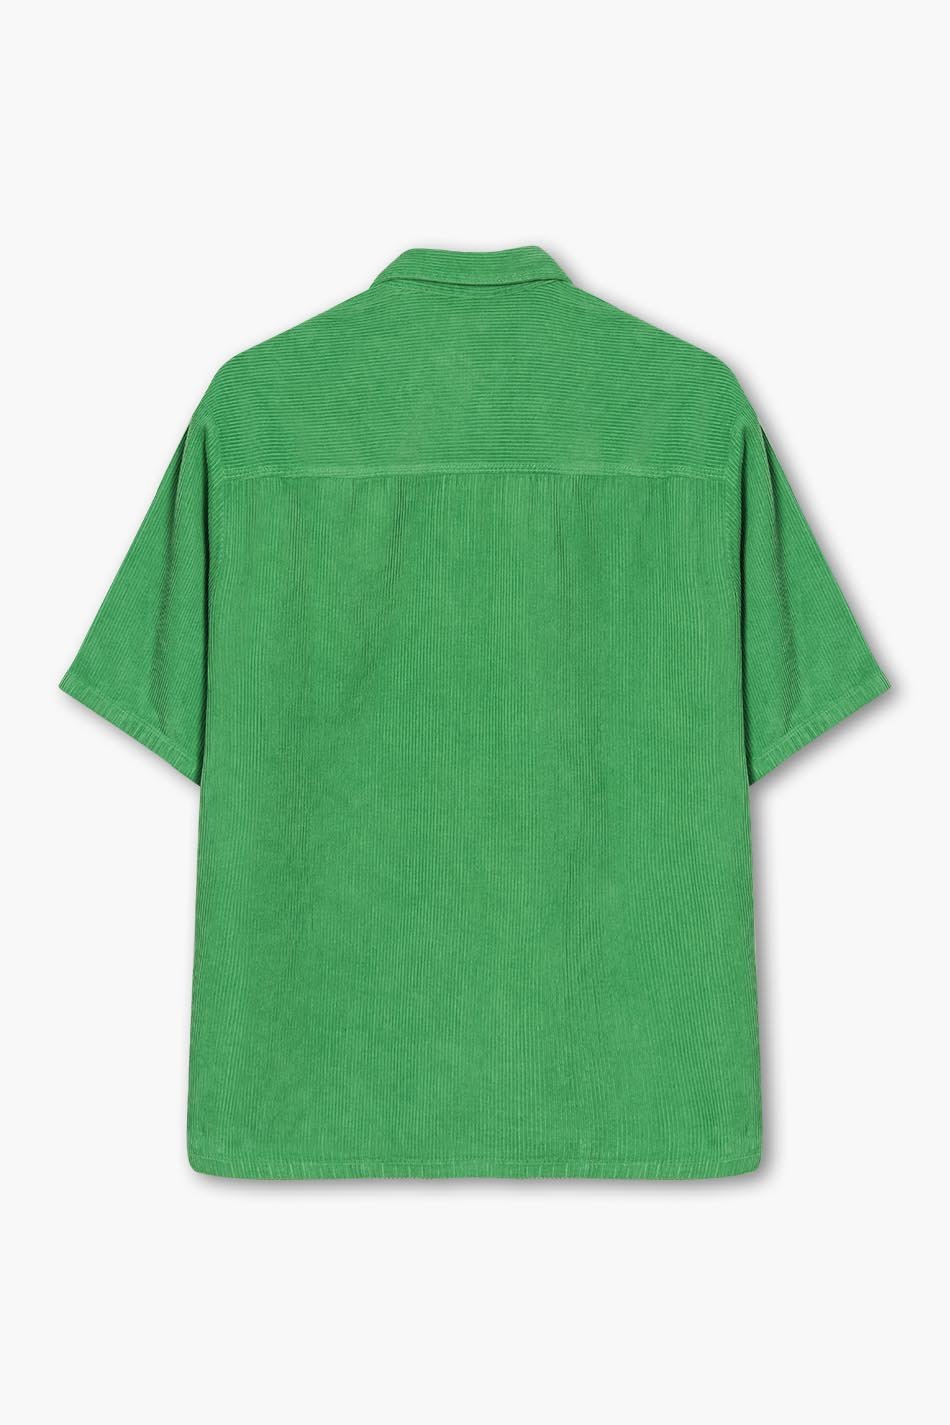 Green Flower Corduroy Shirt